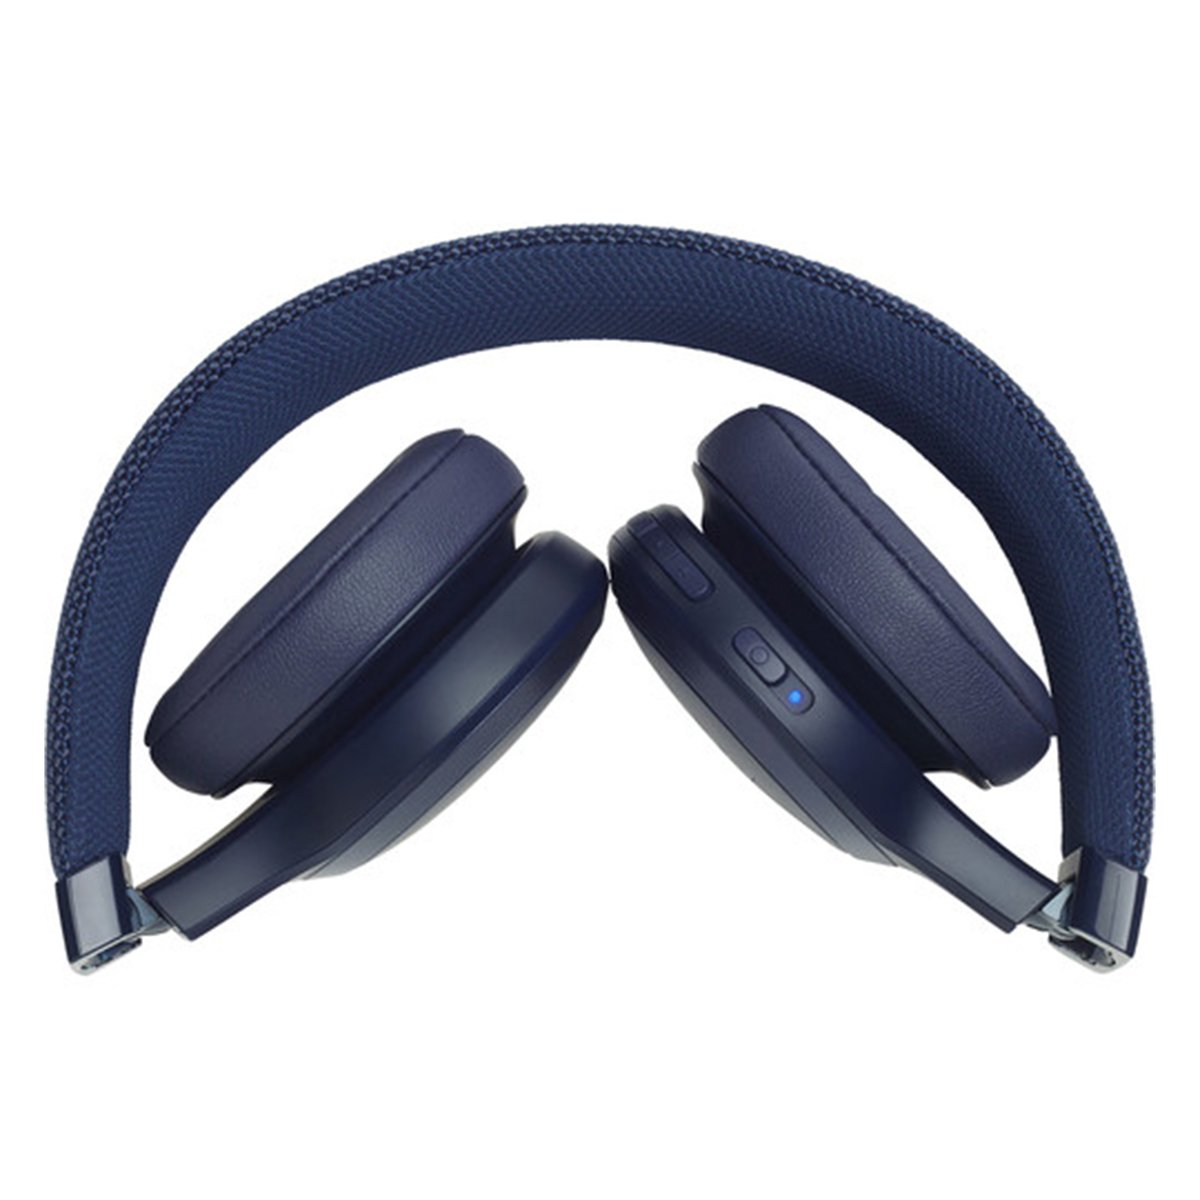 JBL Wireless Headphone LIVE 400BT  Blue